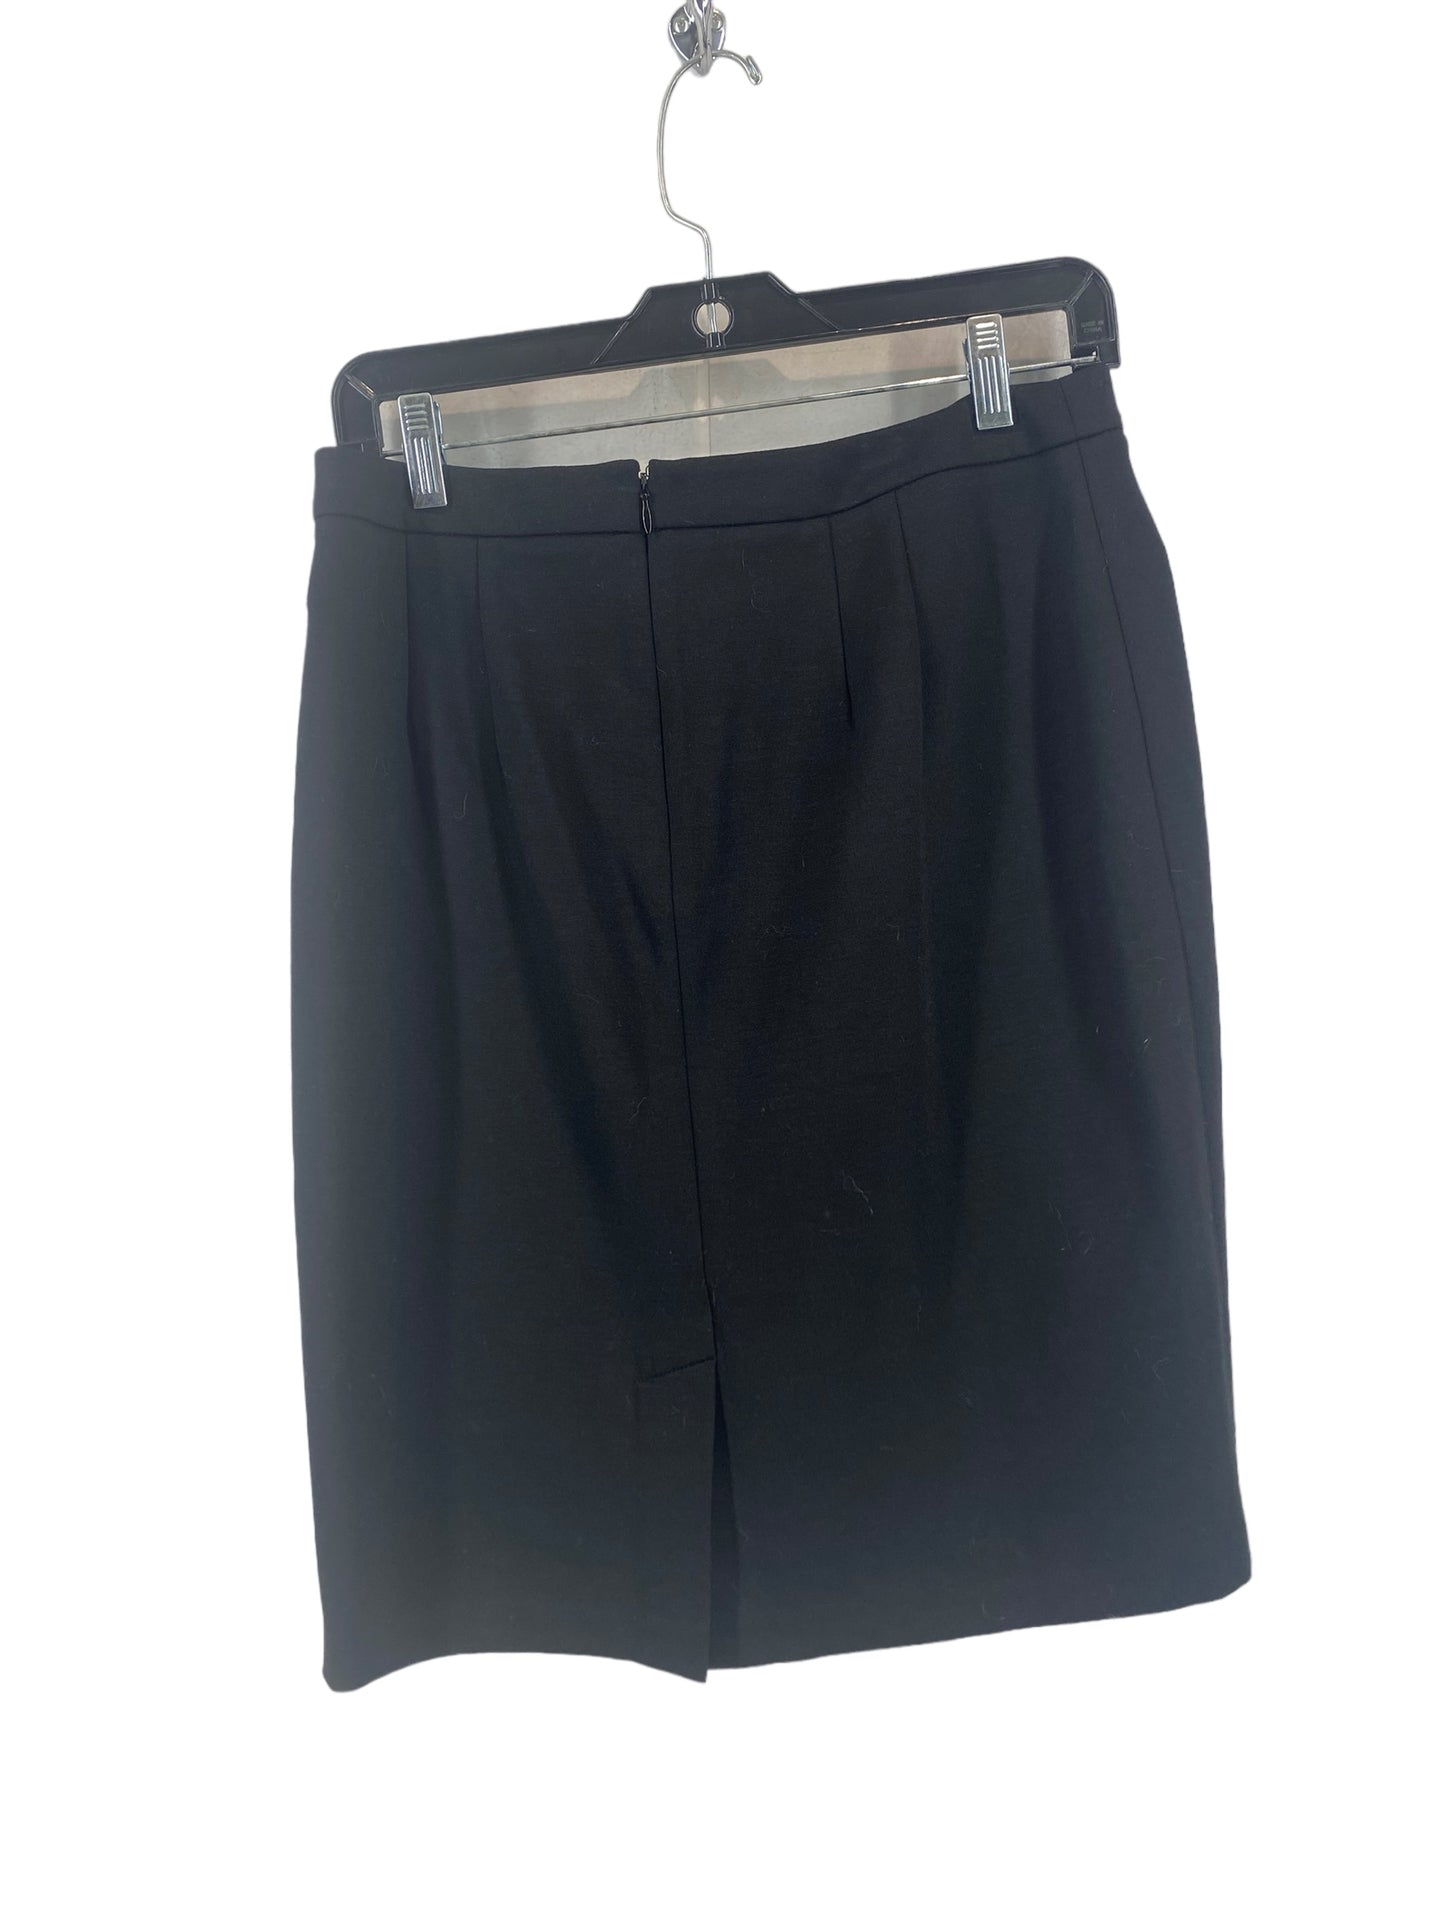 Skirt Mini & Short By Talbots  Size: 8petite